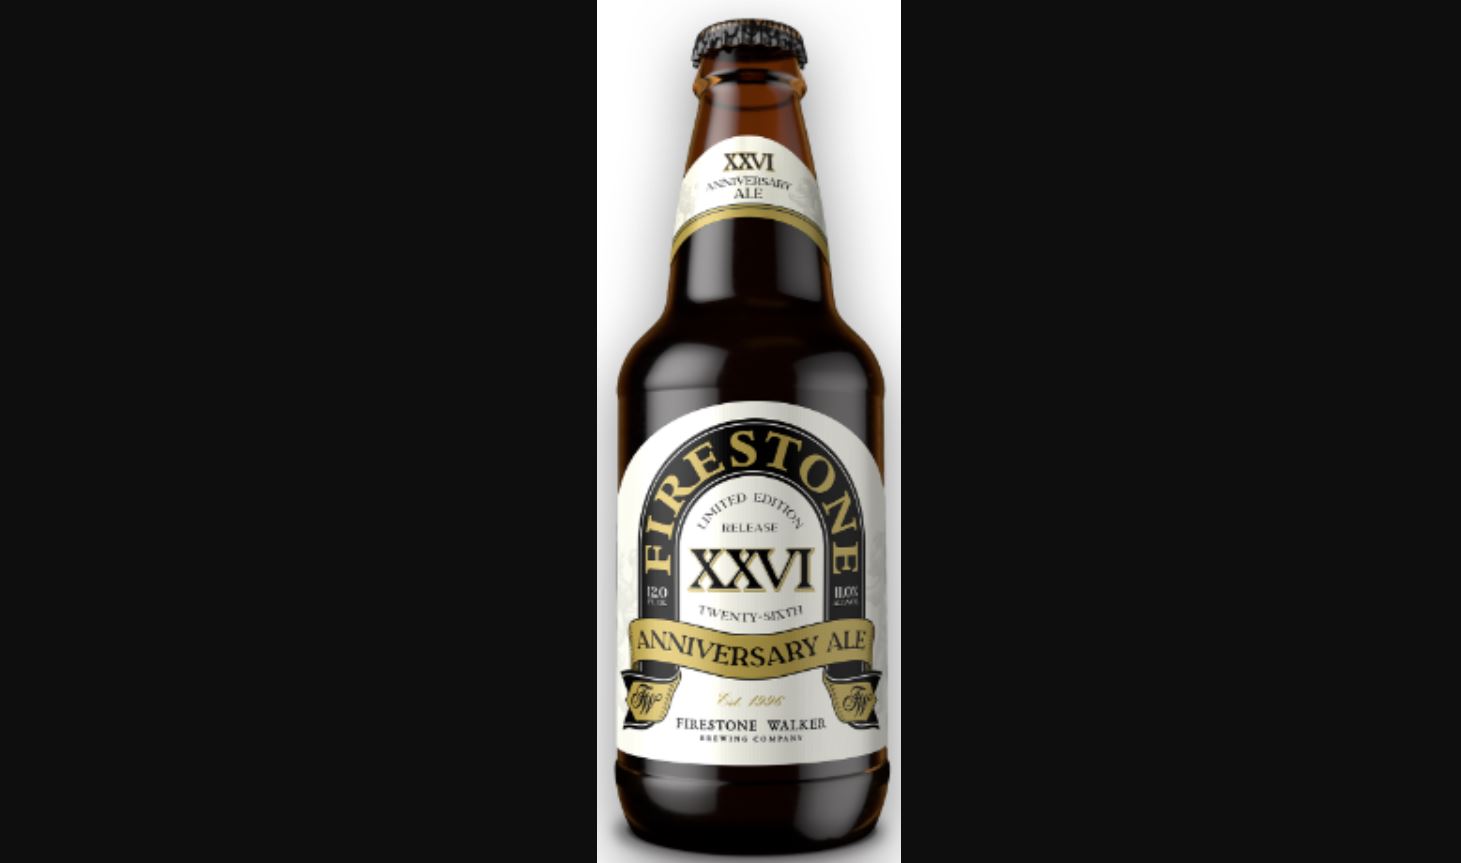 Firestone Walker XXVI Anniversary Ale